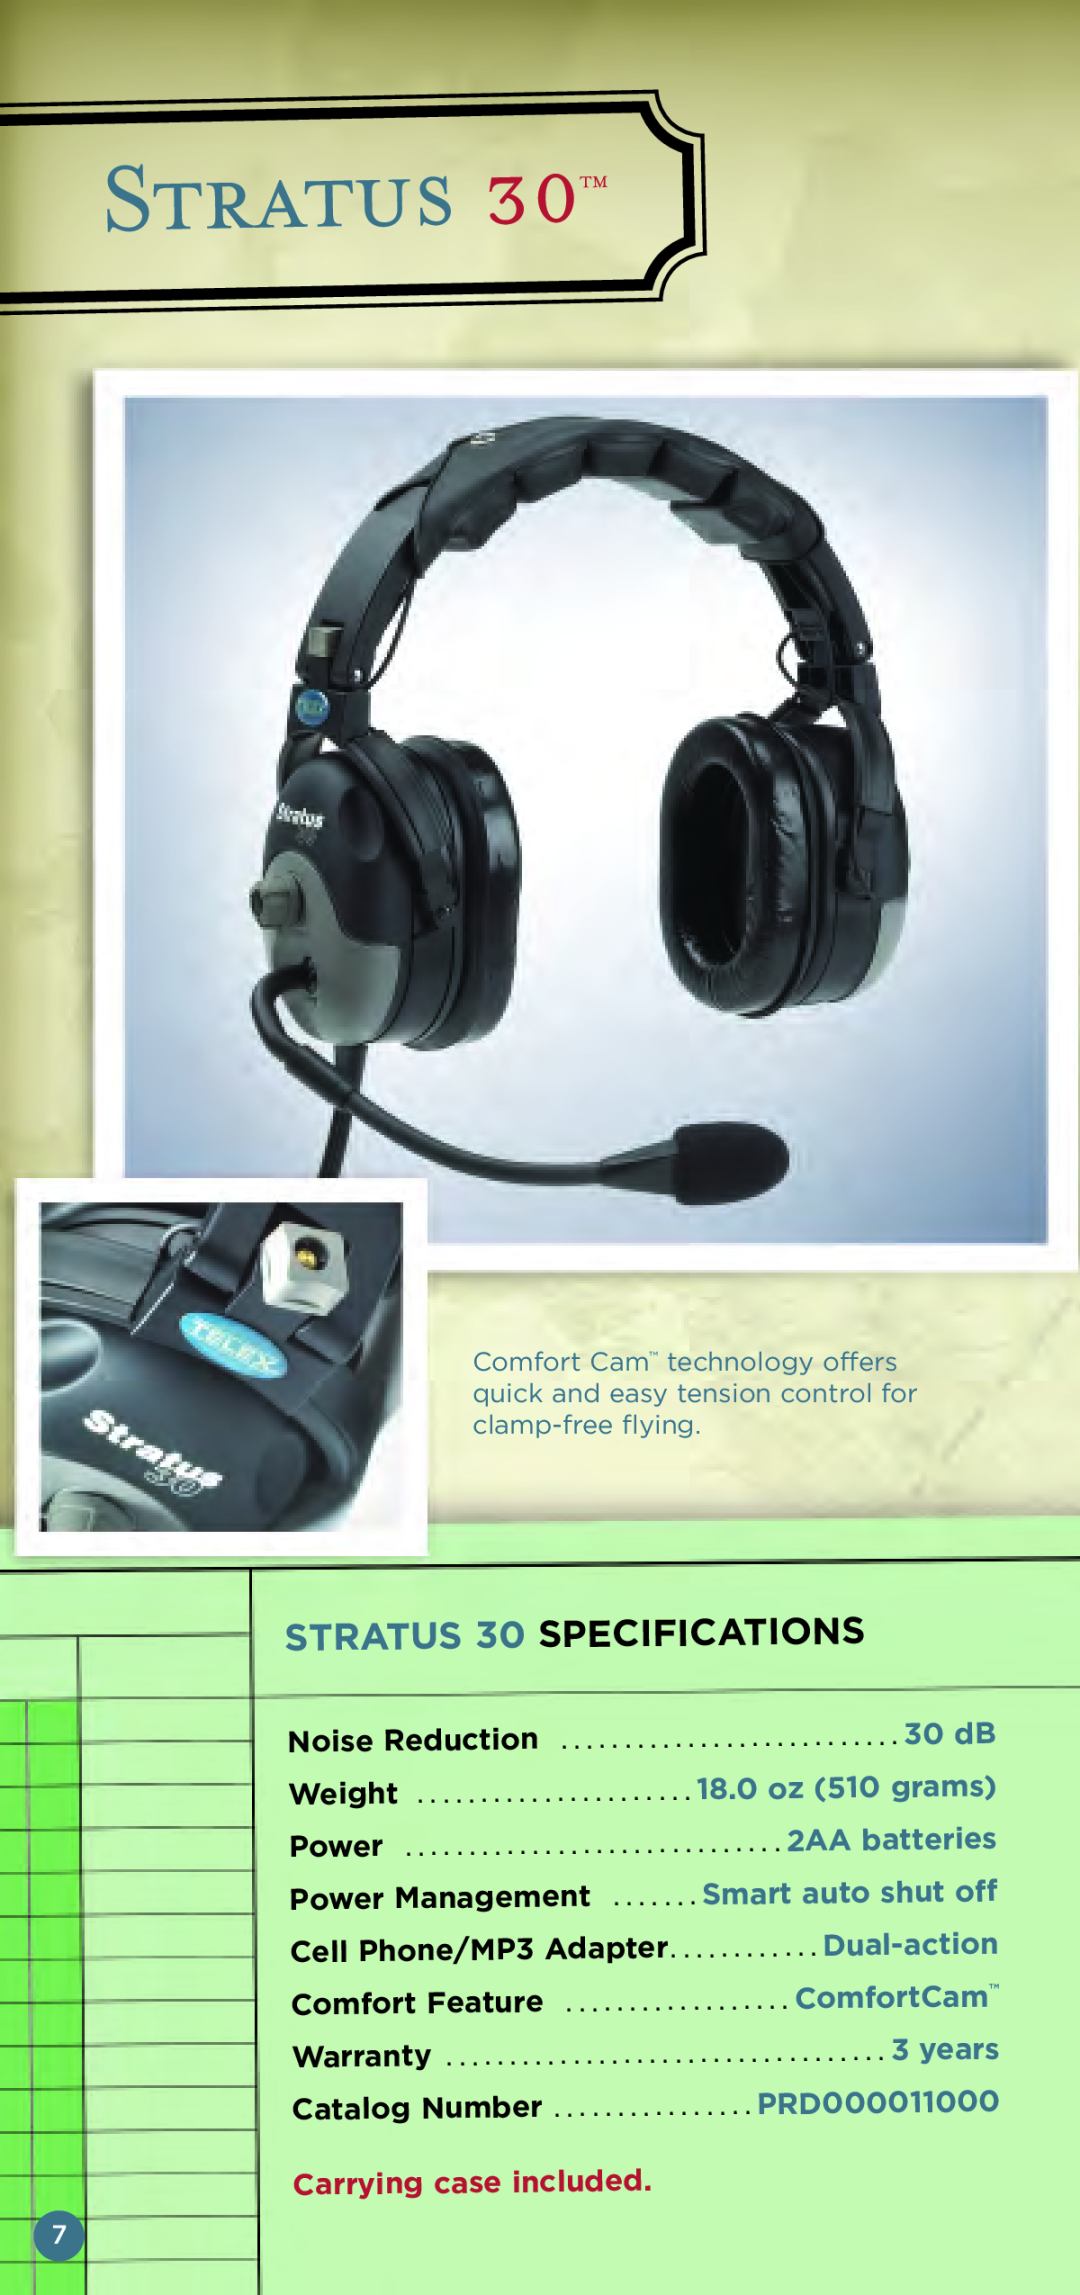 Telex Aviation Headsets Stratus, STRATUS 30 SPECIFICA, Tions, 18.0 oz 510 grams, Smart auto shut off, Comfort Feature 